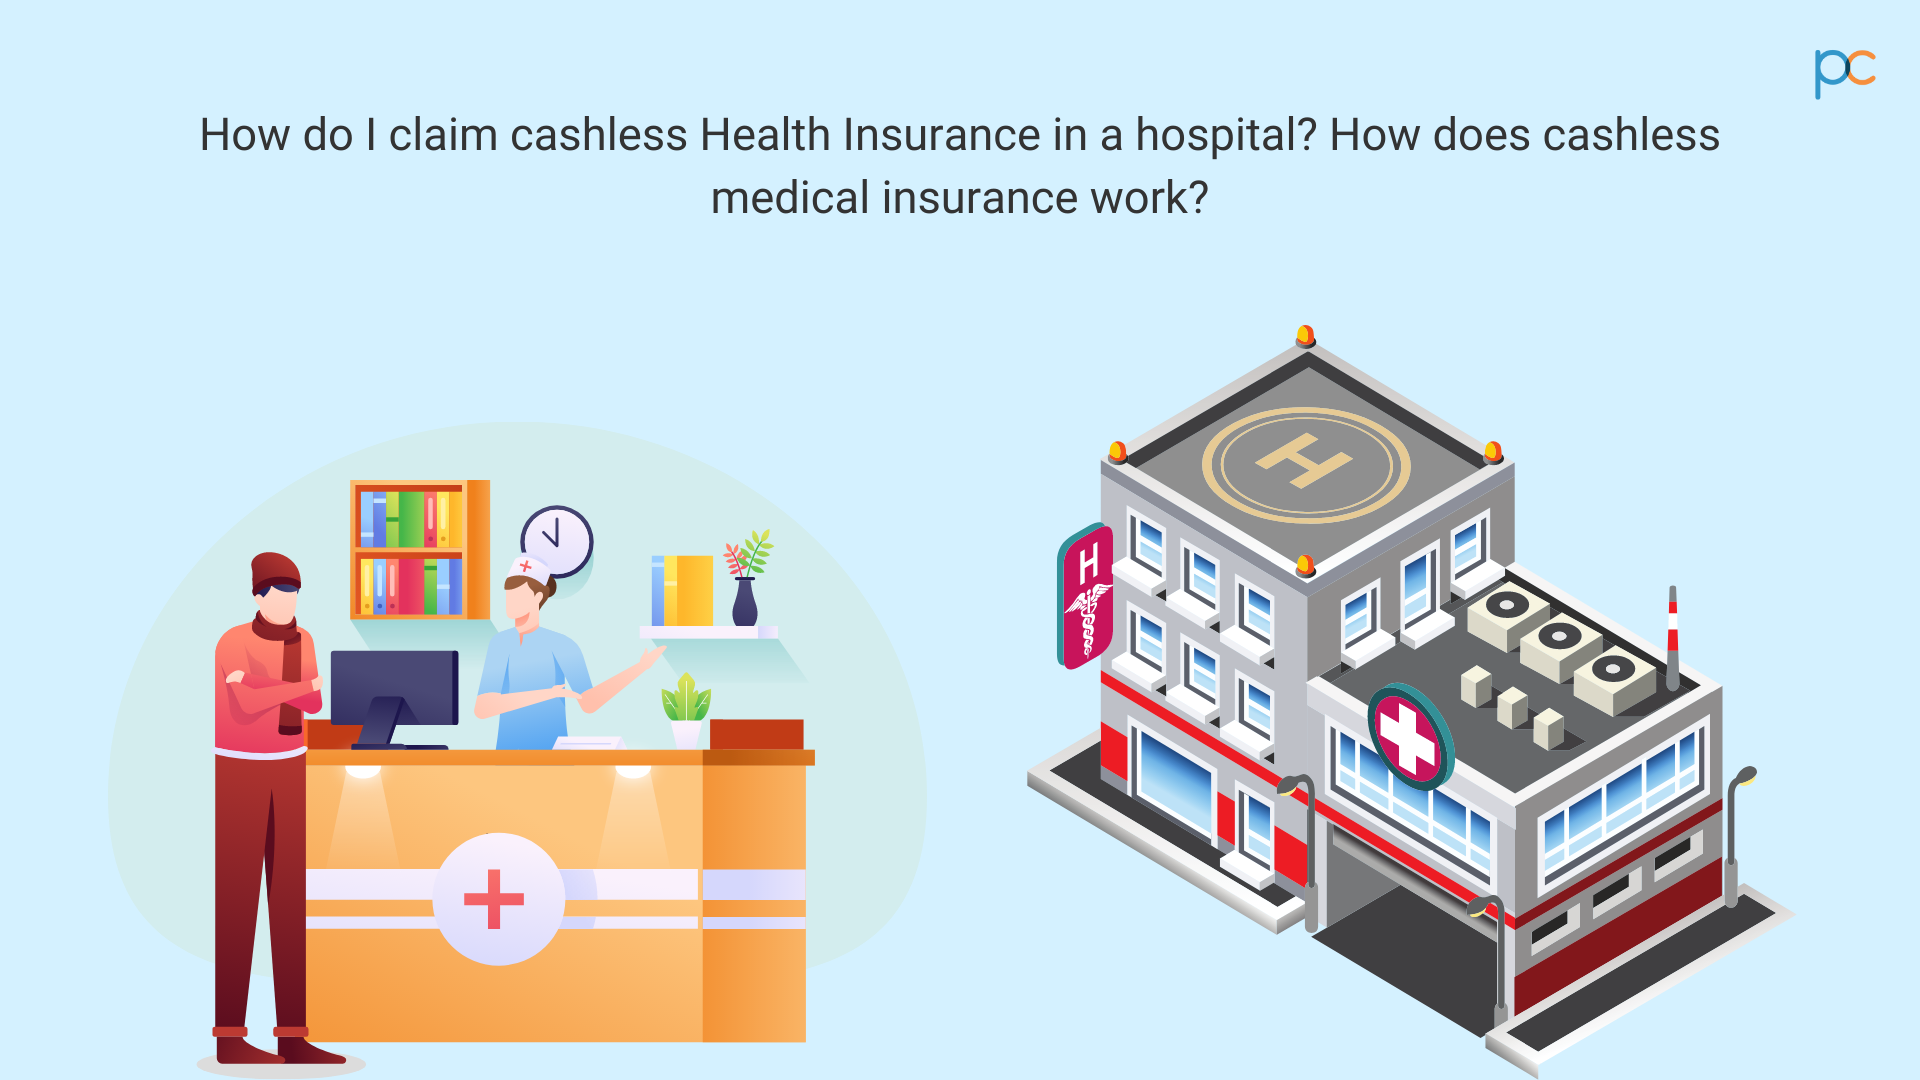 How do I claim cashless health insurance in a hospital